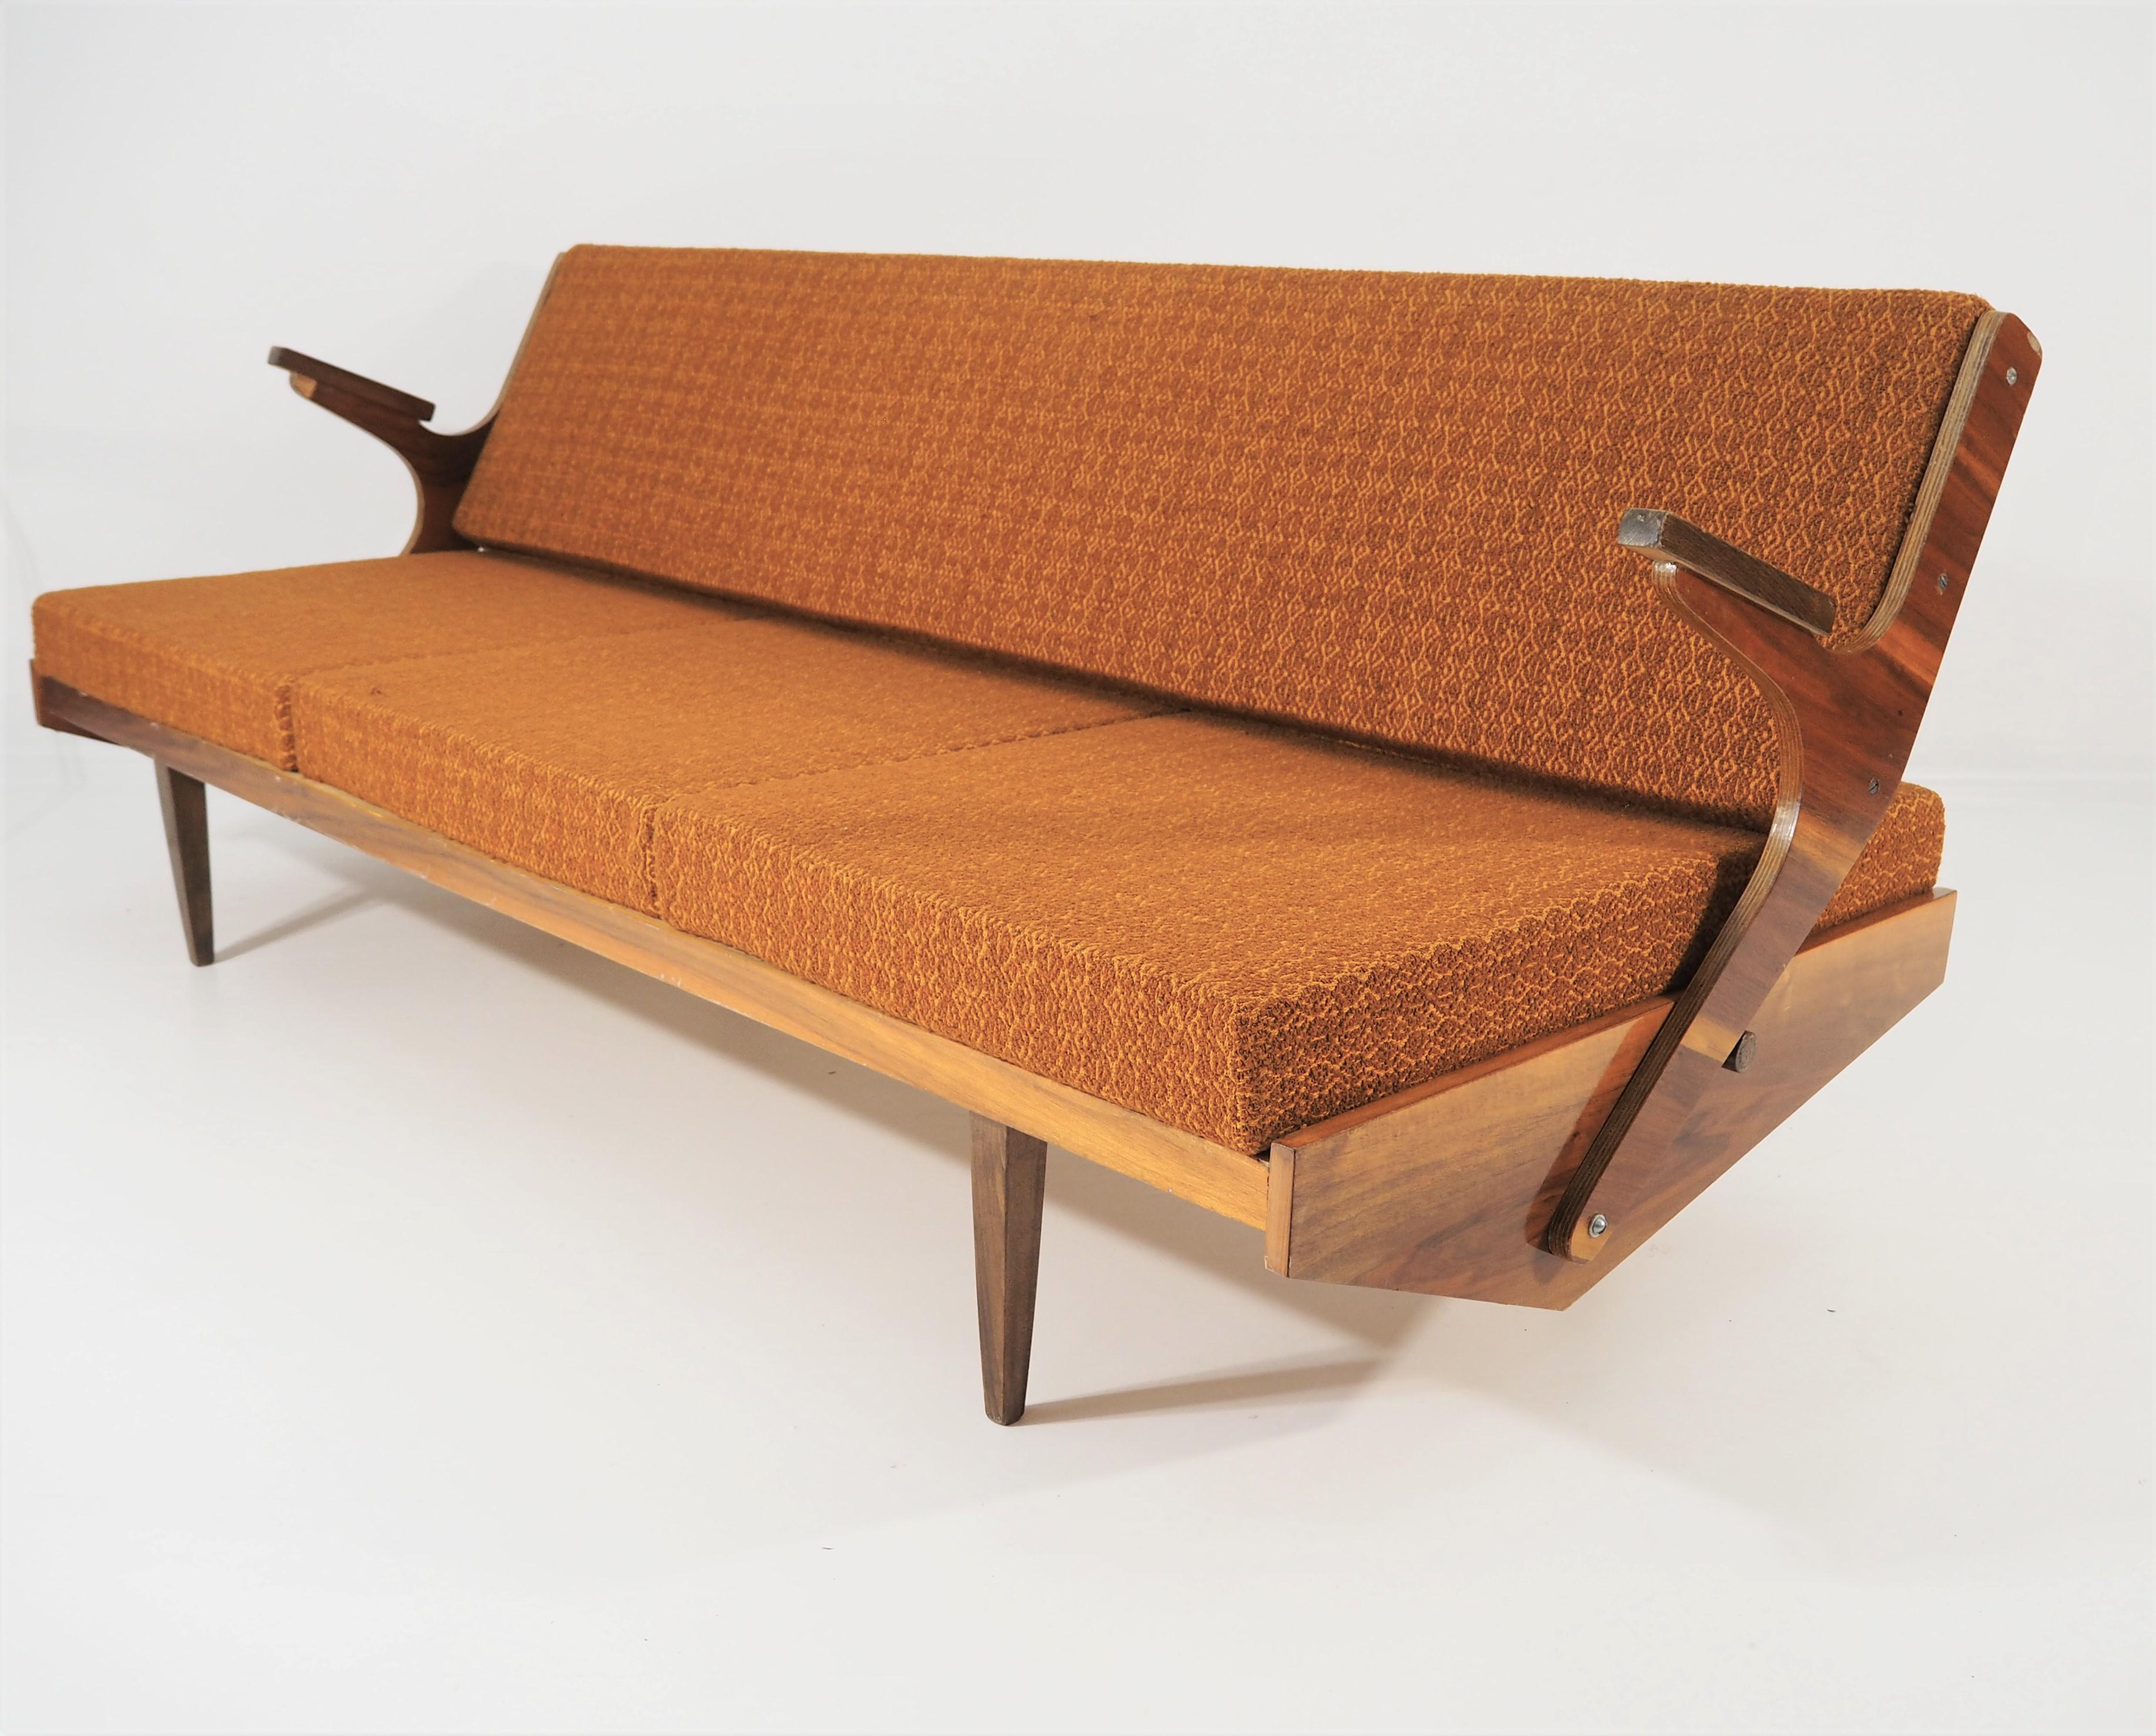 Czech sofa circa 1970 made in former Czechoslovakia. Dimensions: Height 79 cm, length 205 cm, width 88 cm. Minimalist, unusual and interesting form, original condition.